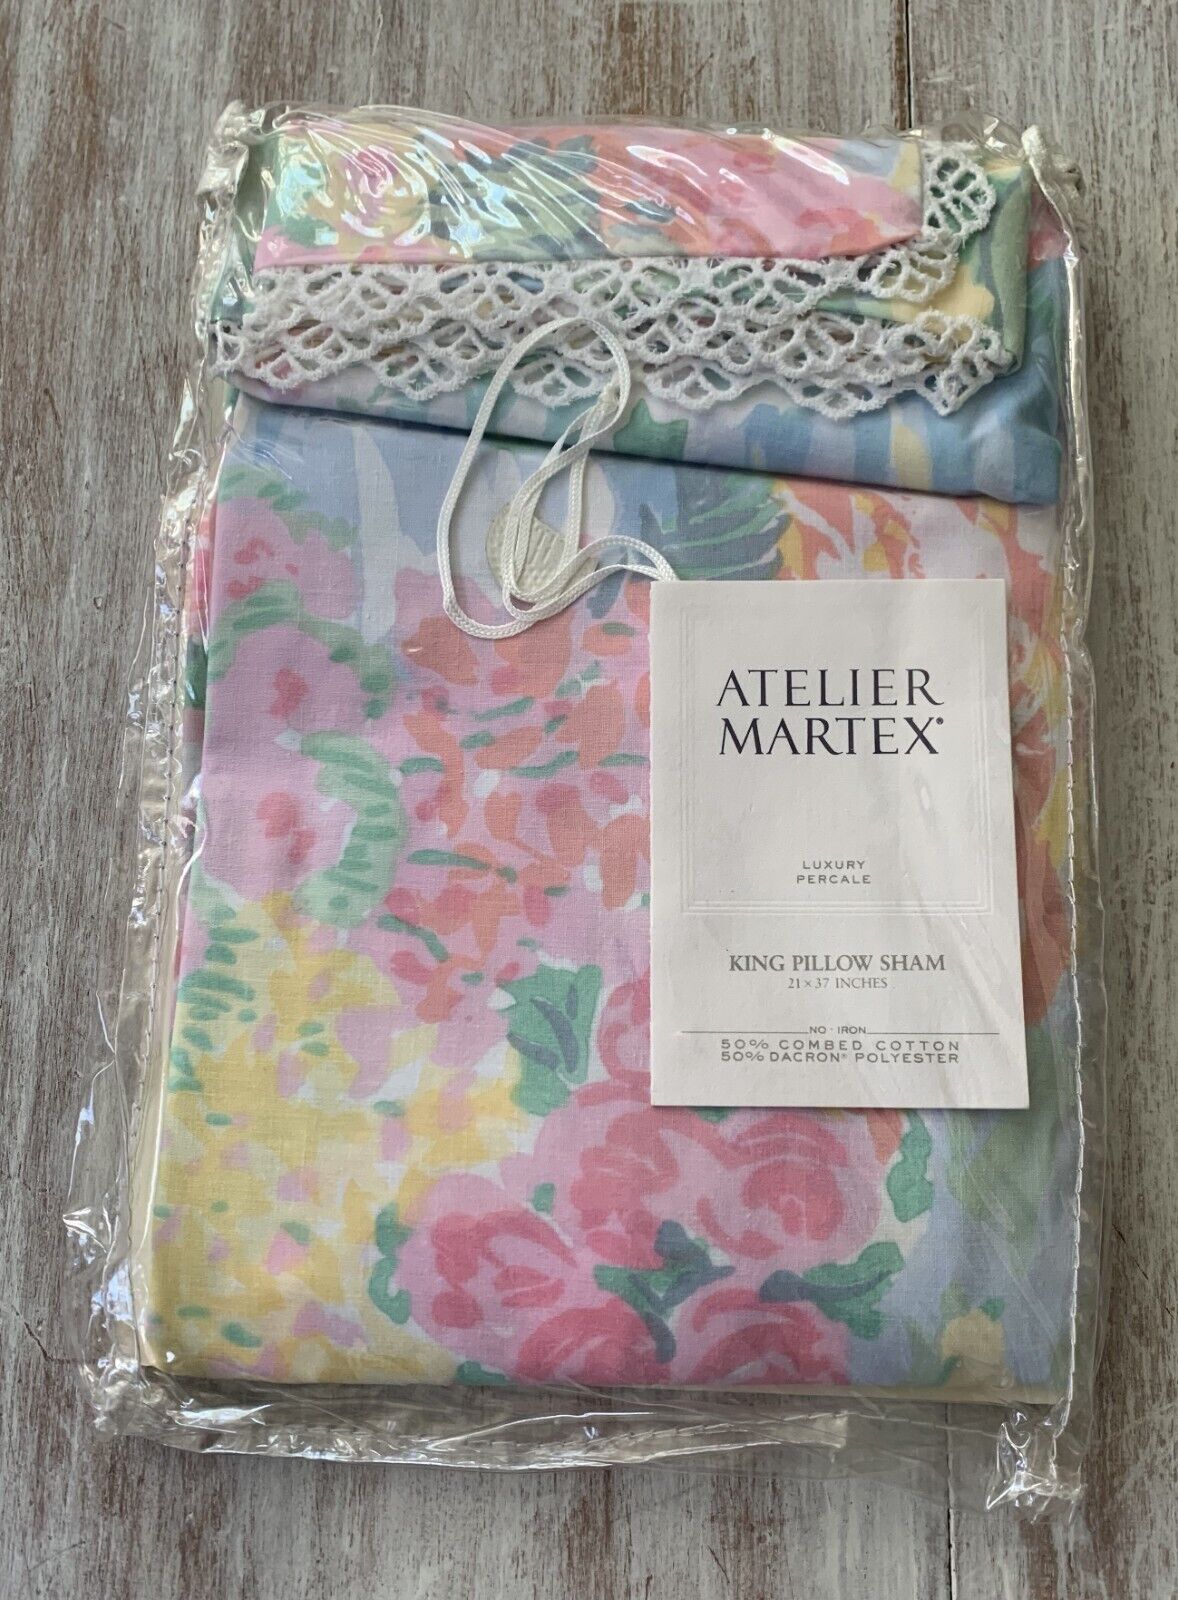 Vtg Atelier Martex MONET\'S LILIES Floral Pillow Sham King Percale Lace USA - NEW